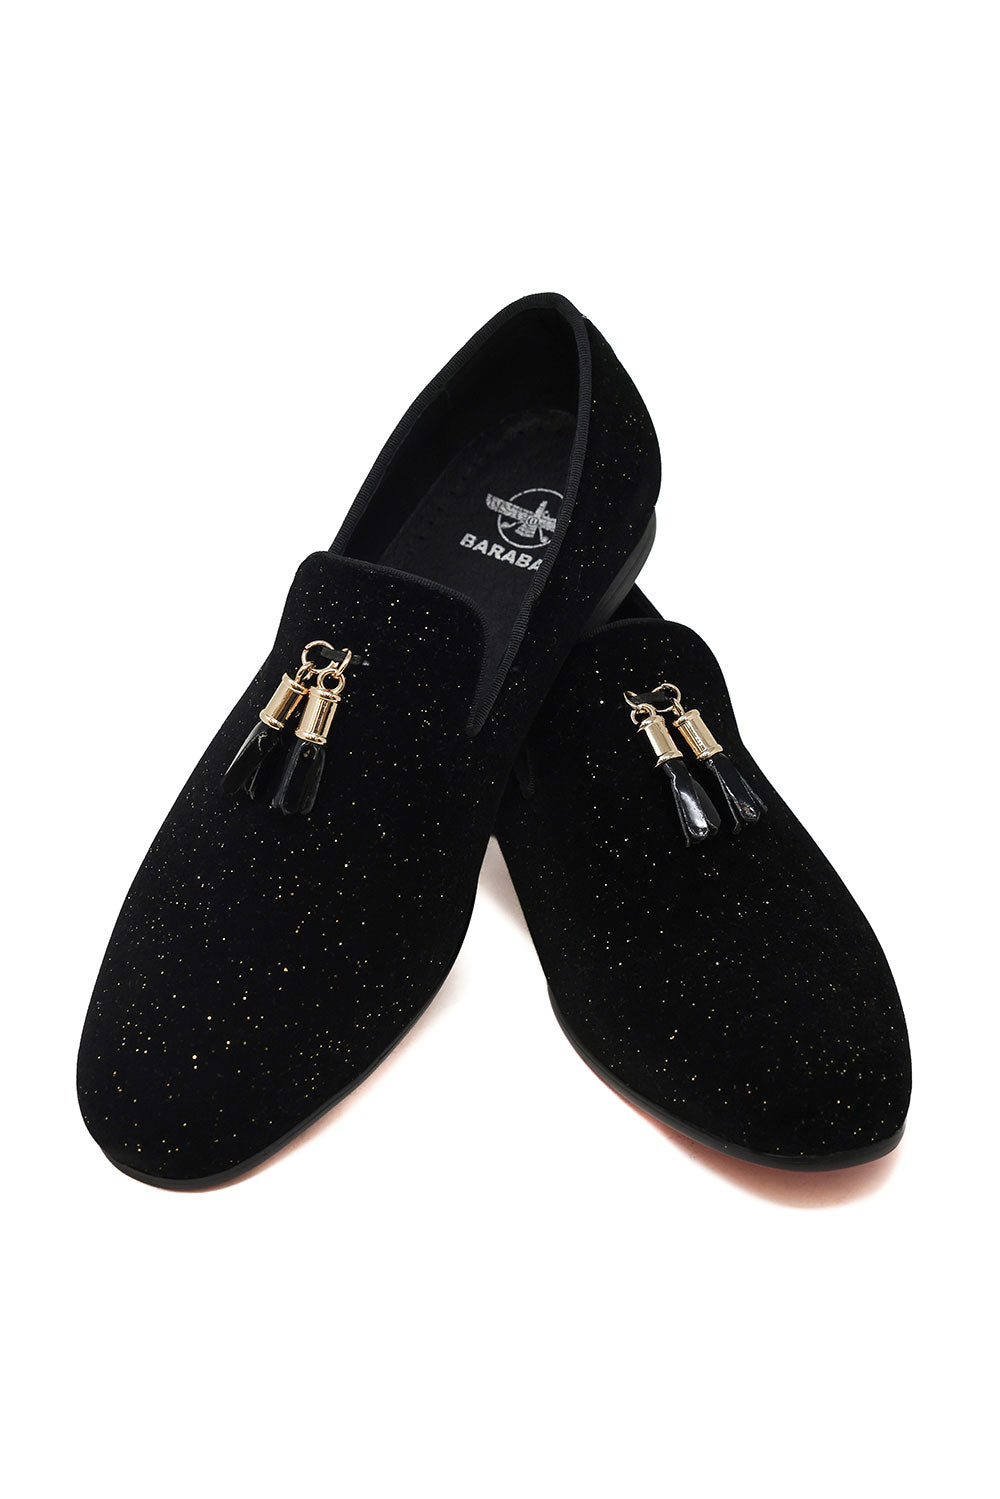 BARABAS Men's Glittery Shiny Luxury Tassel Loafer Shoes 2SH3106